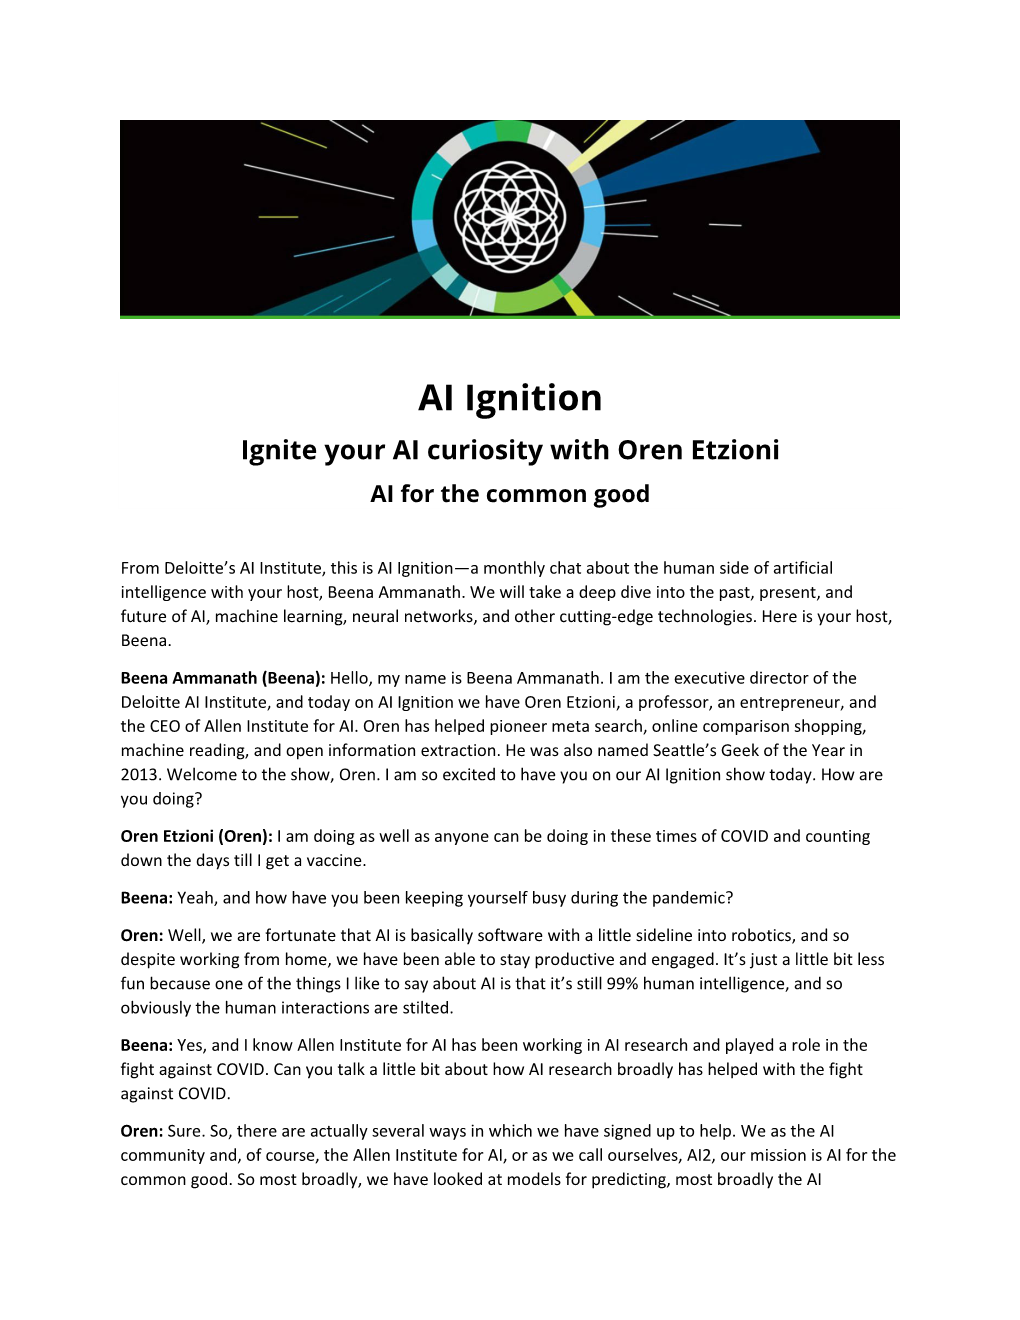 AI Ignition Ignite Your AI Curiosity with Oren Etzioni AI for the Common Good